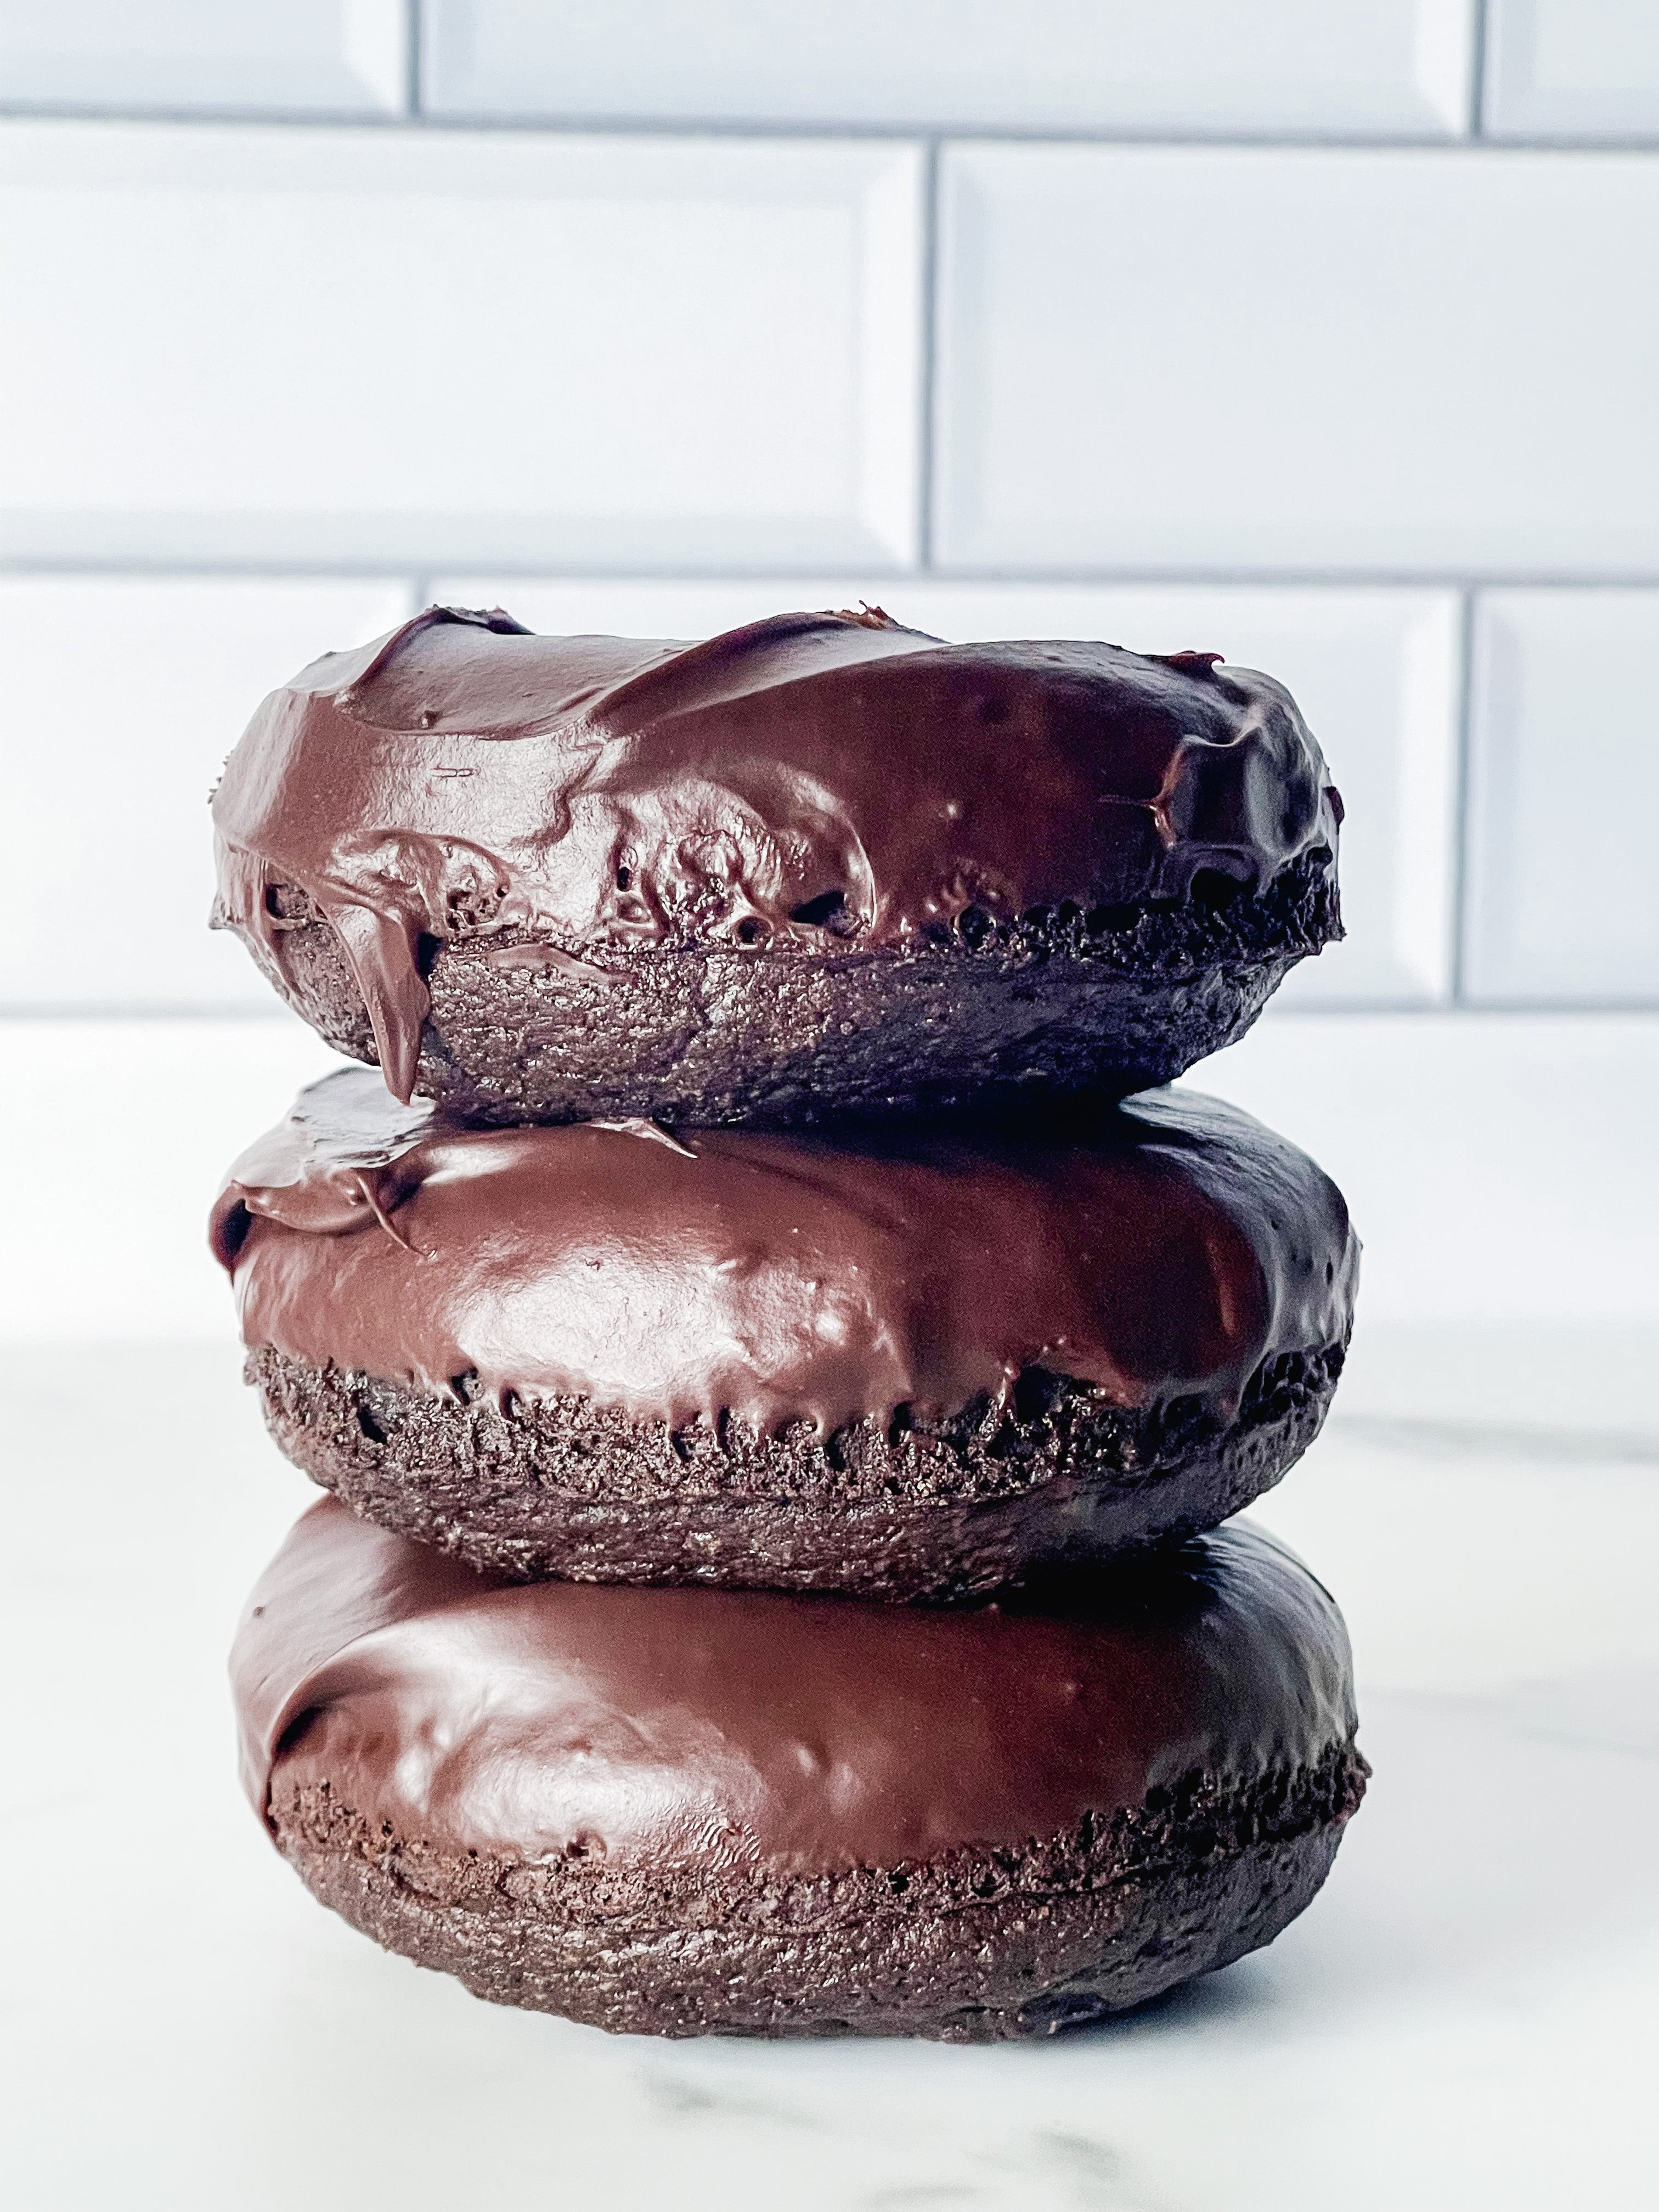 Chocolate Glazed Donuts Recipe | My Baking Addiction